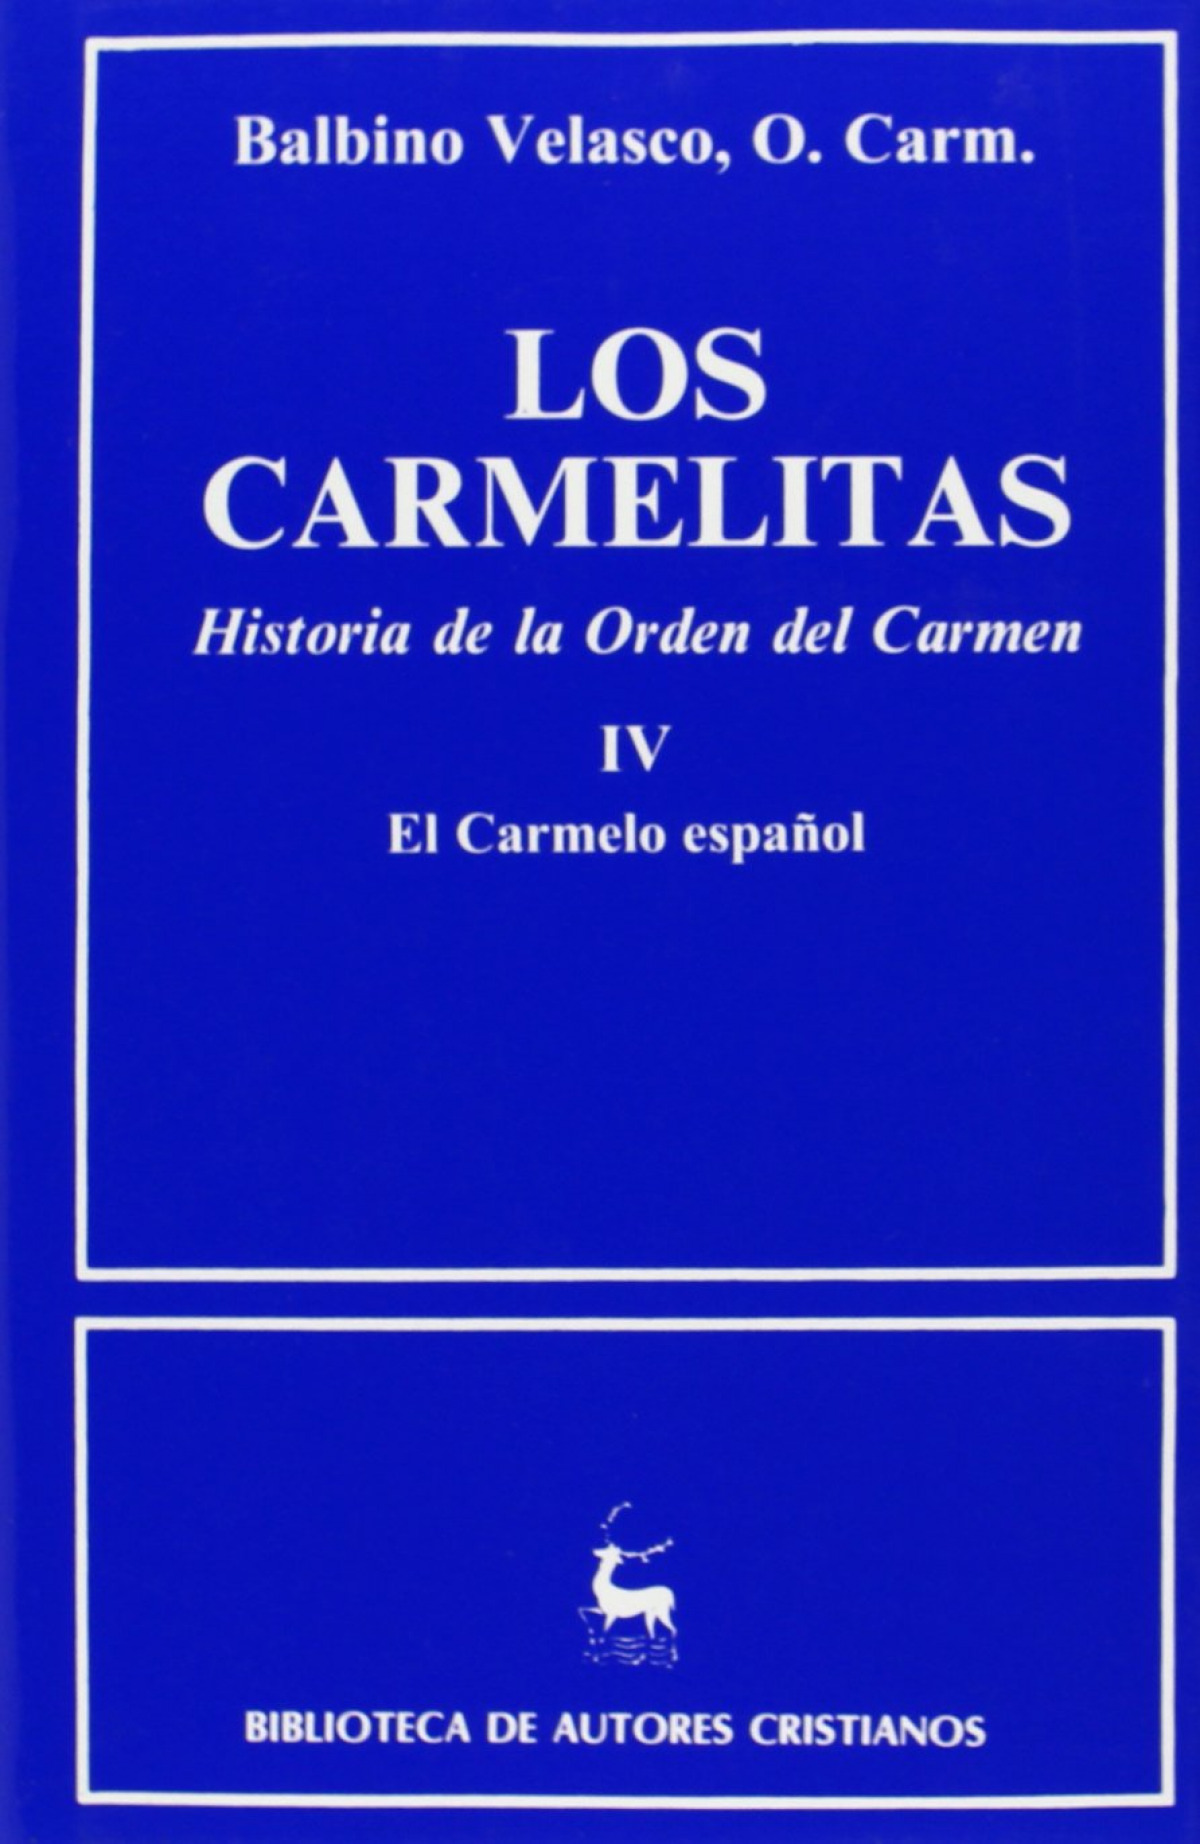 Los carmelitas.Historia de la Orden del Carmen.IV: El Carmelo español - Velasco Bayón, Balbino